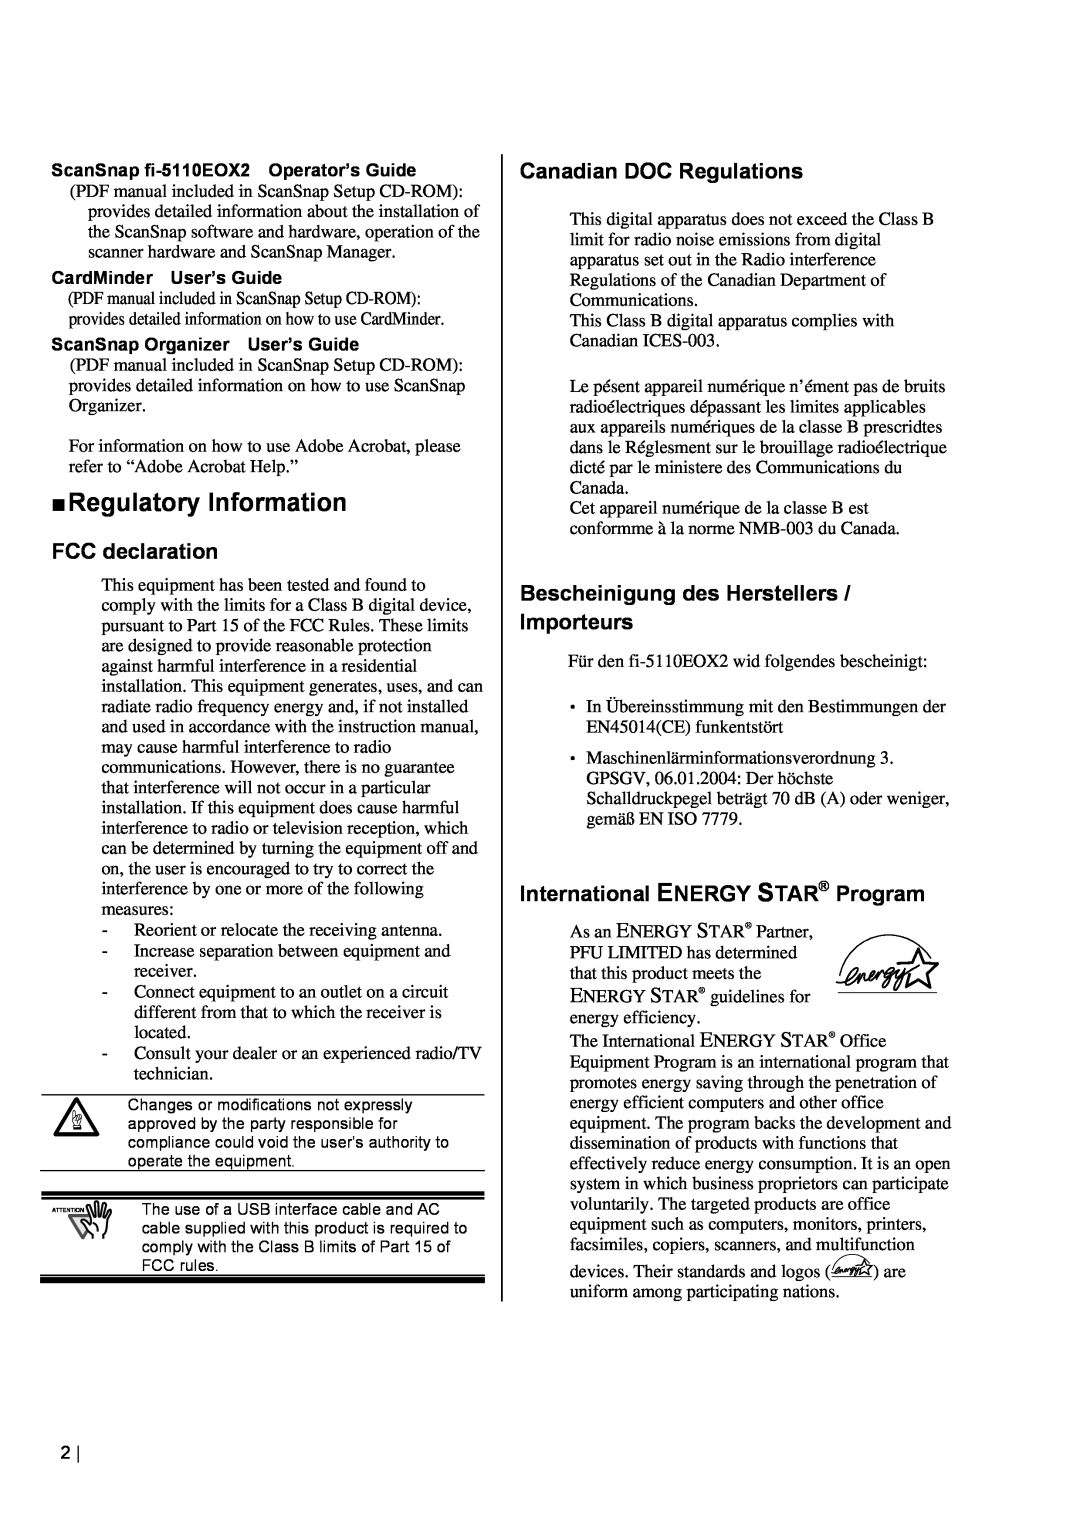 Fujitsu fi-5110EOX2 „ Regulatory Information, FCC declaration, Canadian DOC Regulations, International ENERGY STAR Program 